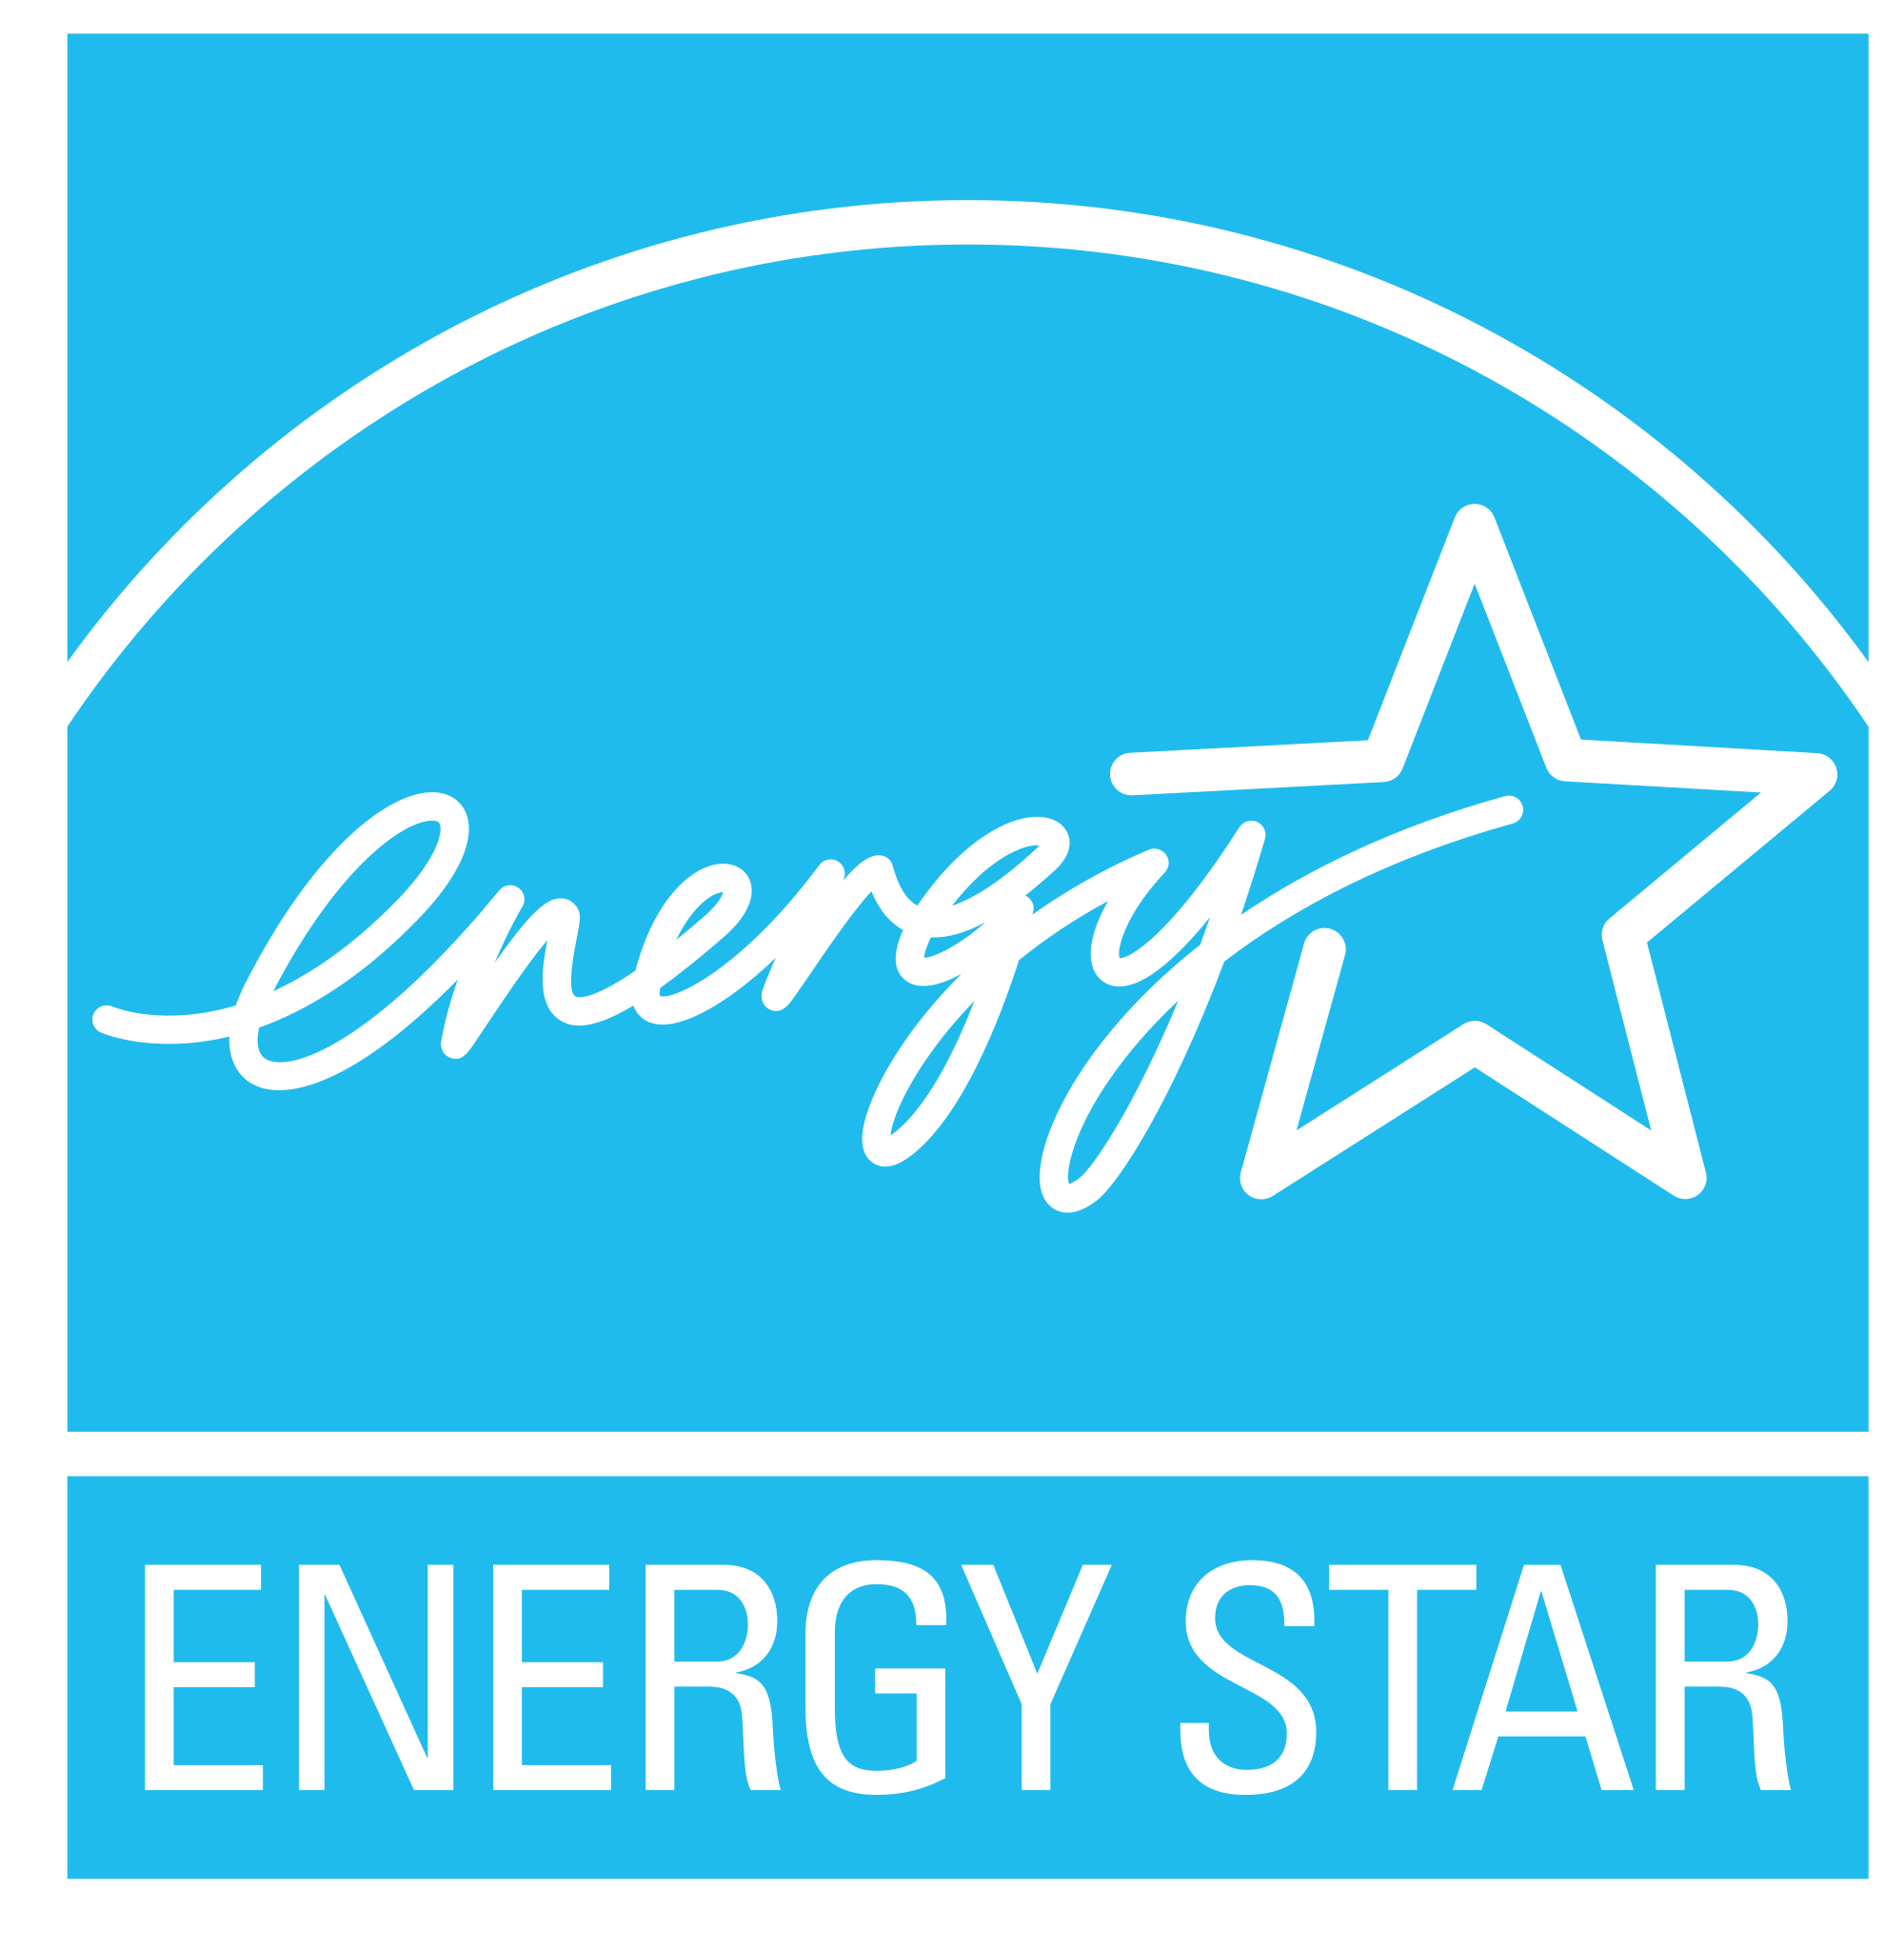 https://upload.wikimedia.org/wikipedia/commons/thumb/7/73/Energy_Star_logo.svg/2000px-Energy_Star_logo.svg.png